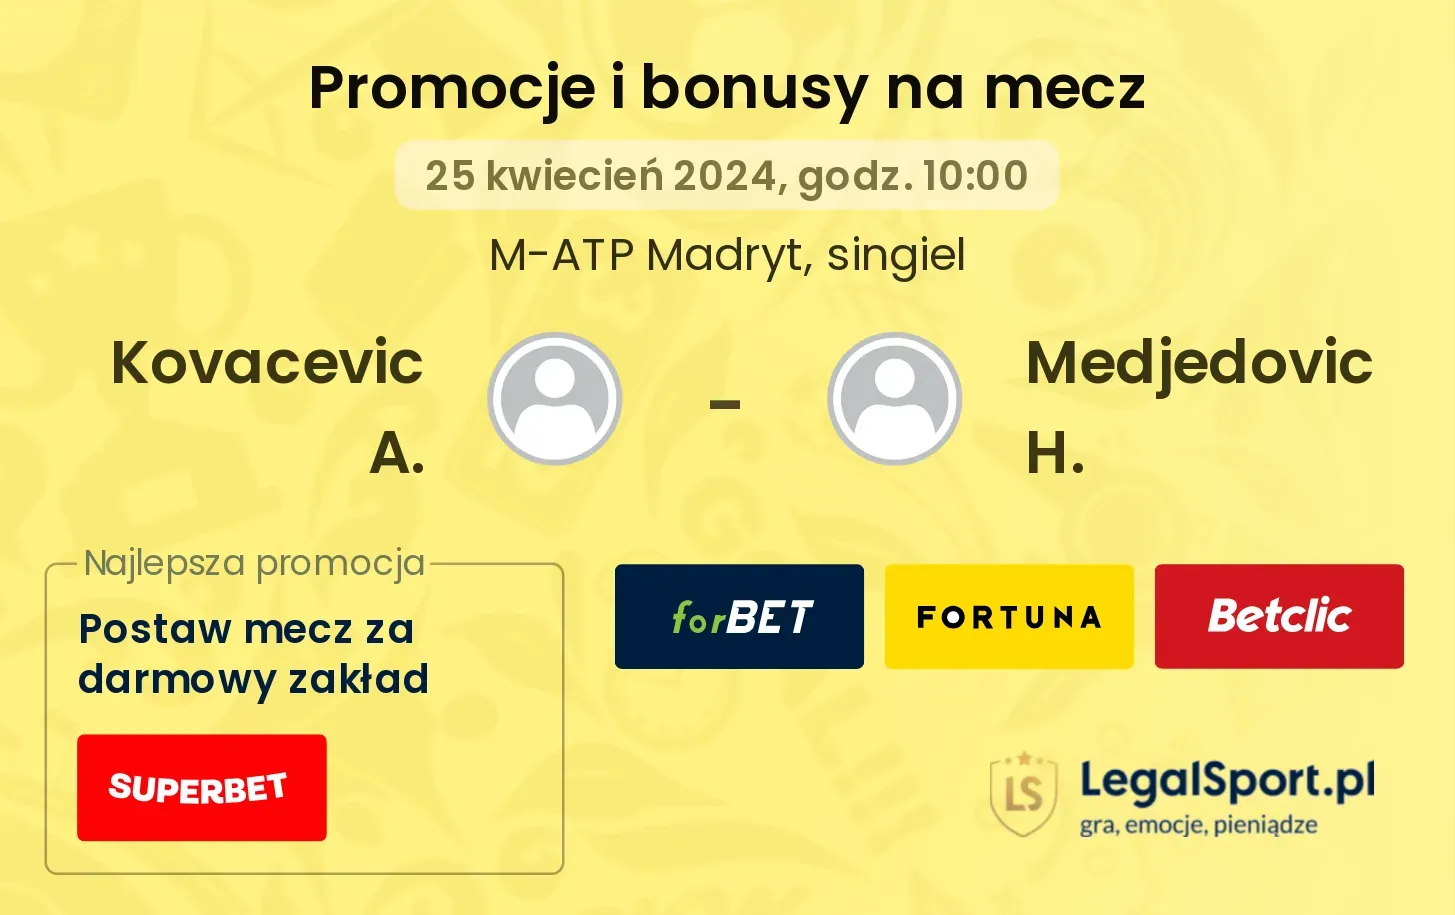 Kovacevic A. - Medjedovic H. promocje bonusy na mecz